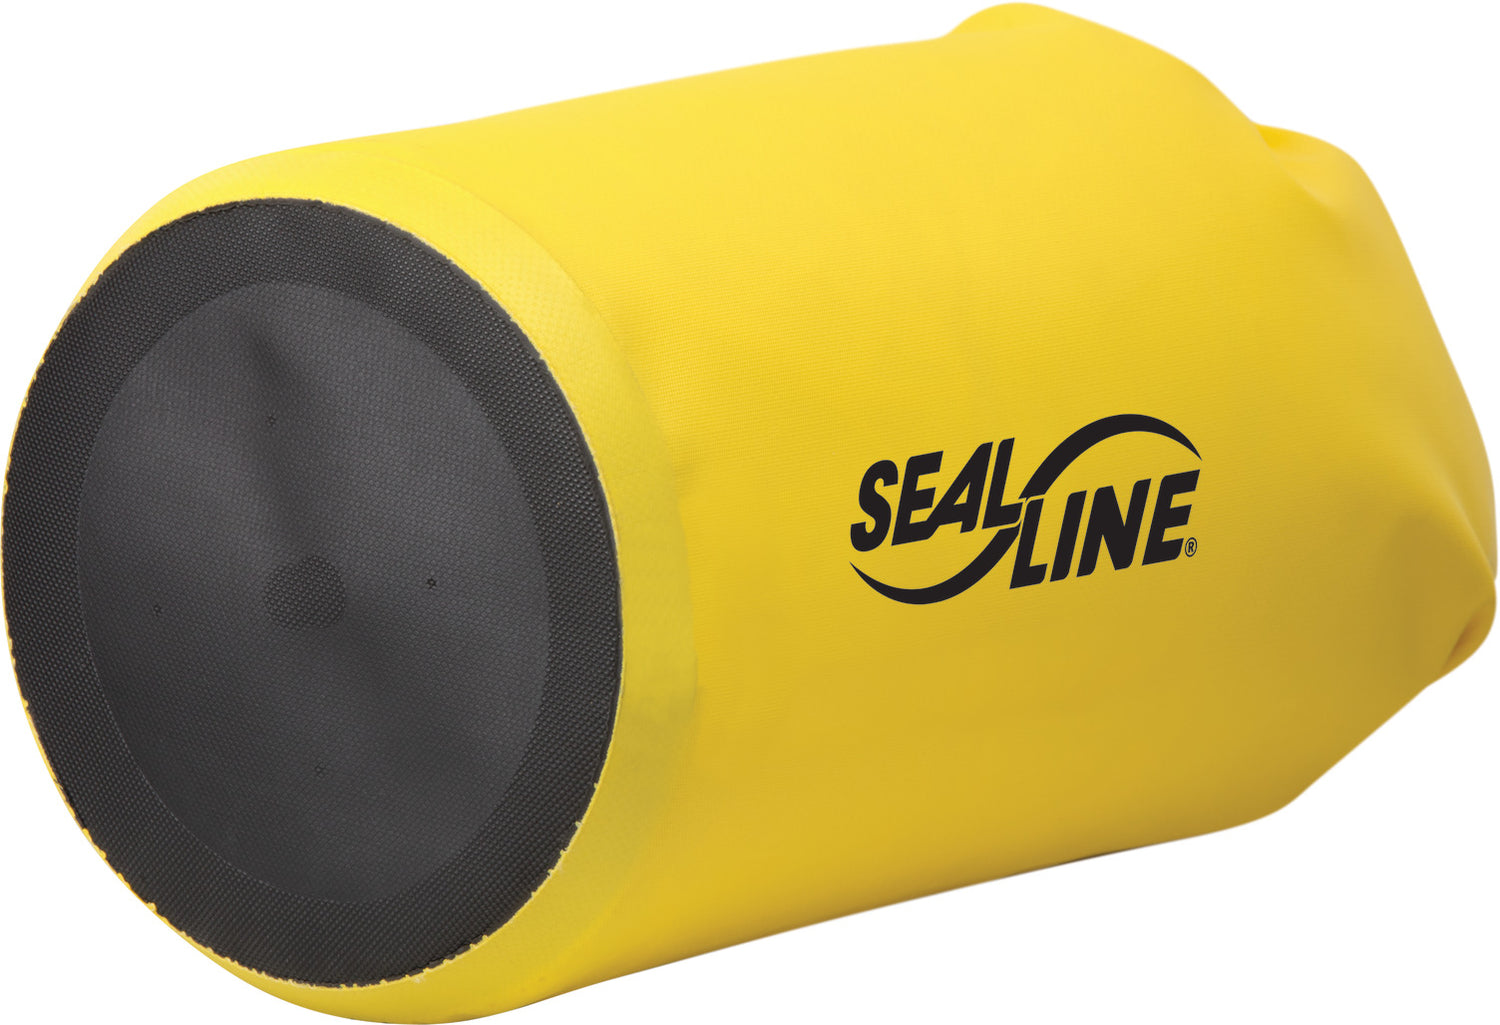 SealLine Baja Dry Bag 10L Yellow